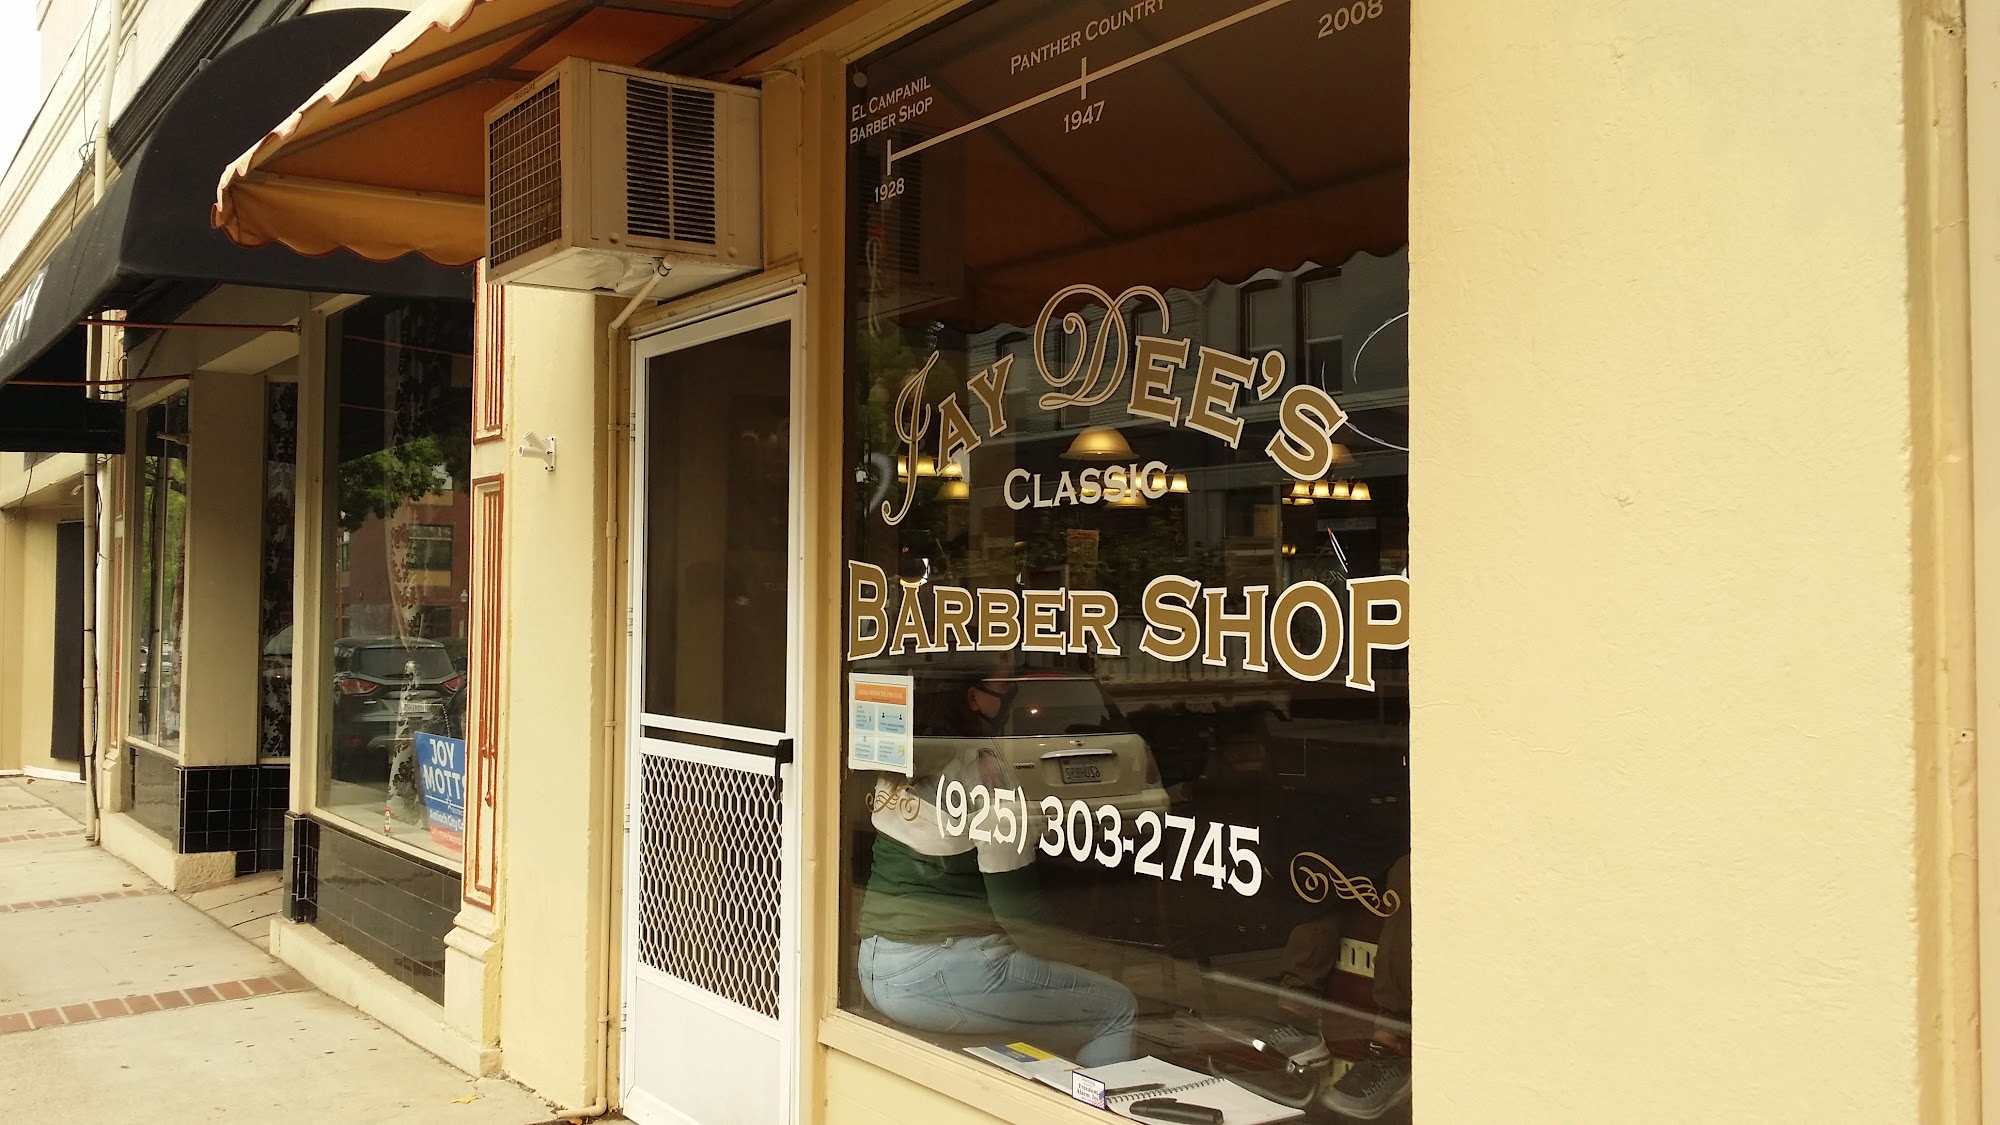 Jay Dee's Classic Barber Shop